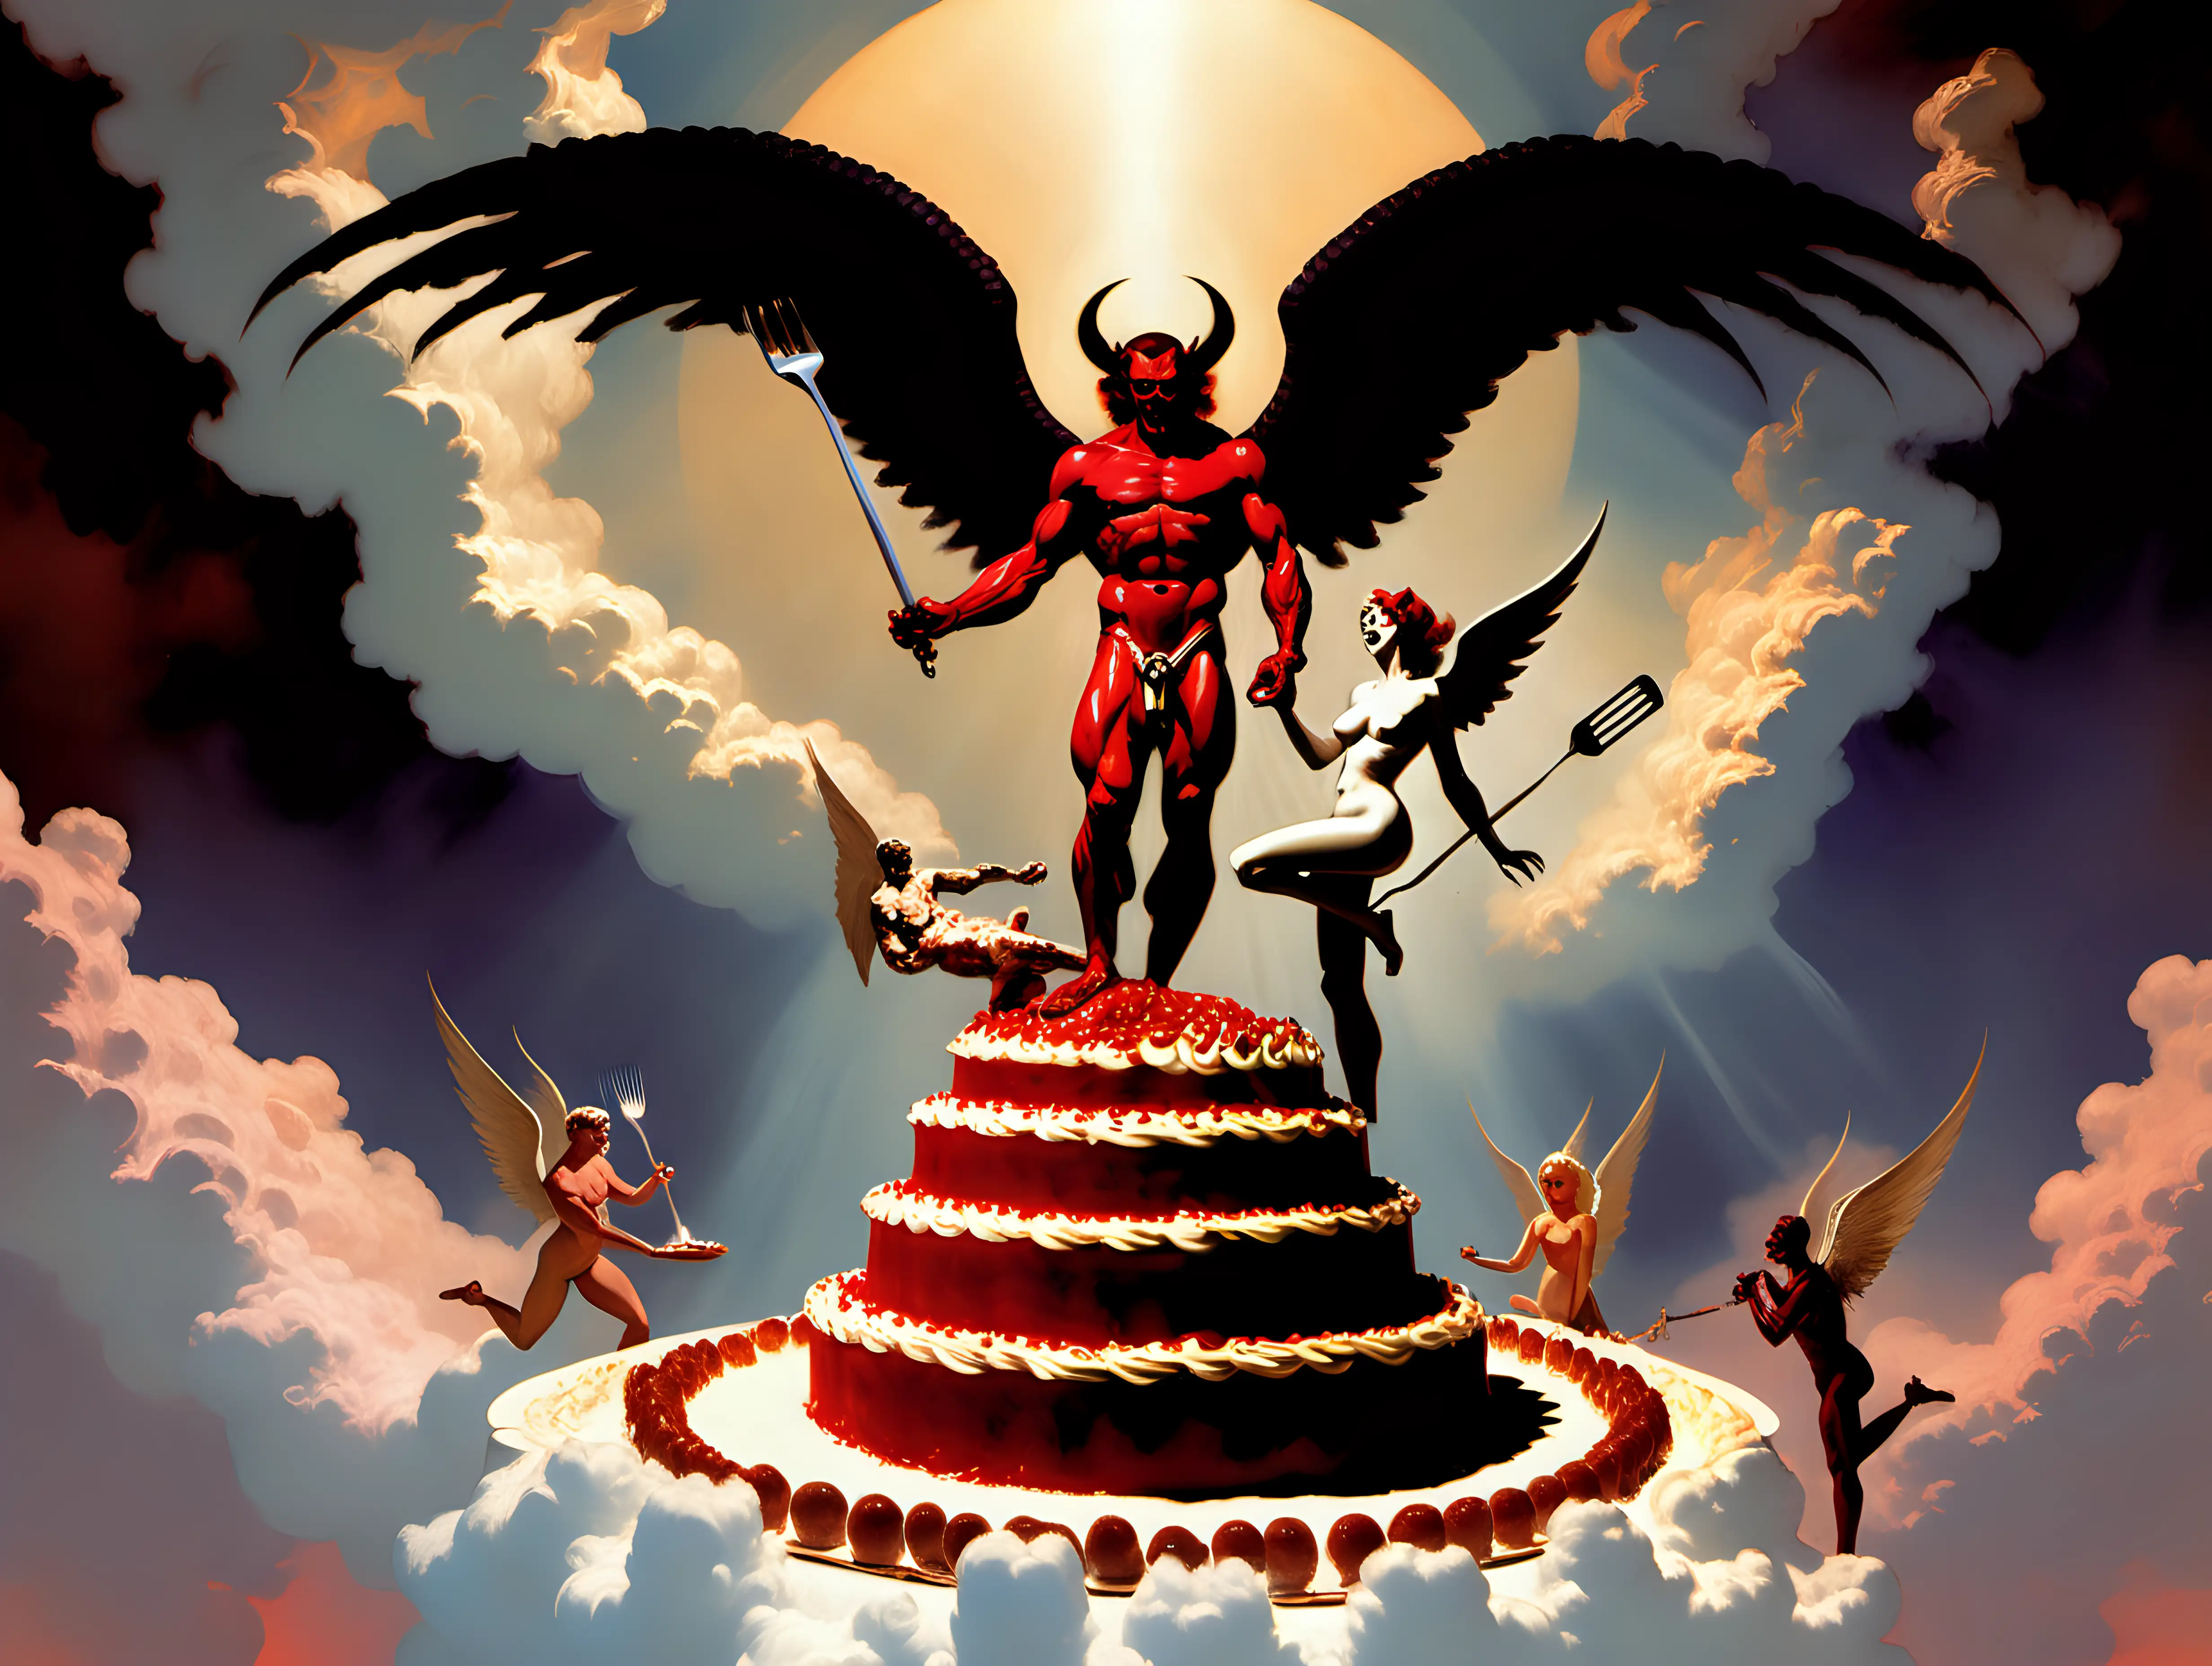 Heavenly BakeOff Satan vs Michael the Archangel in Epic Frank Frazetta Style